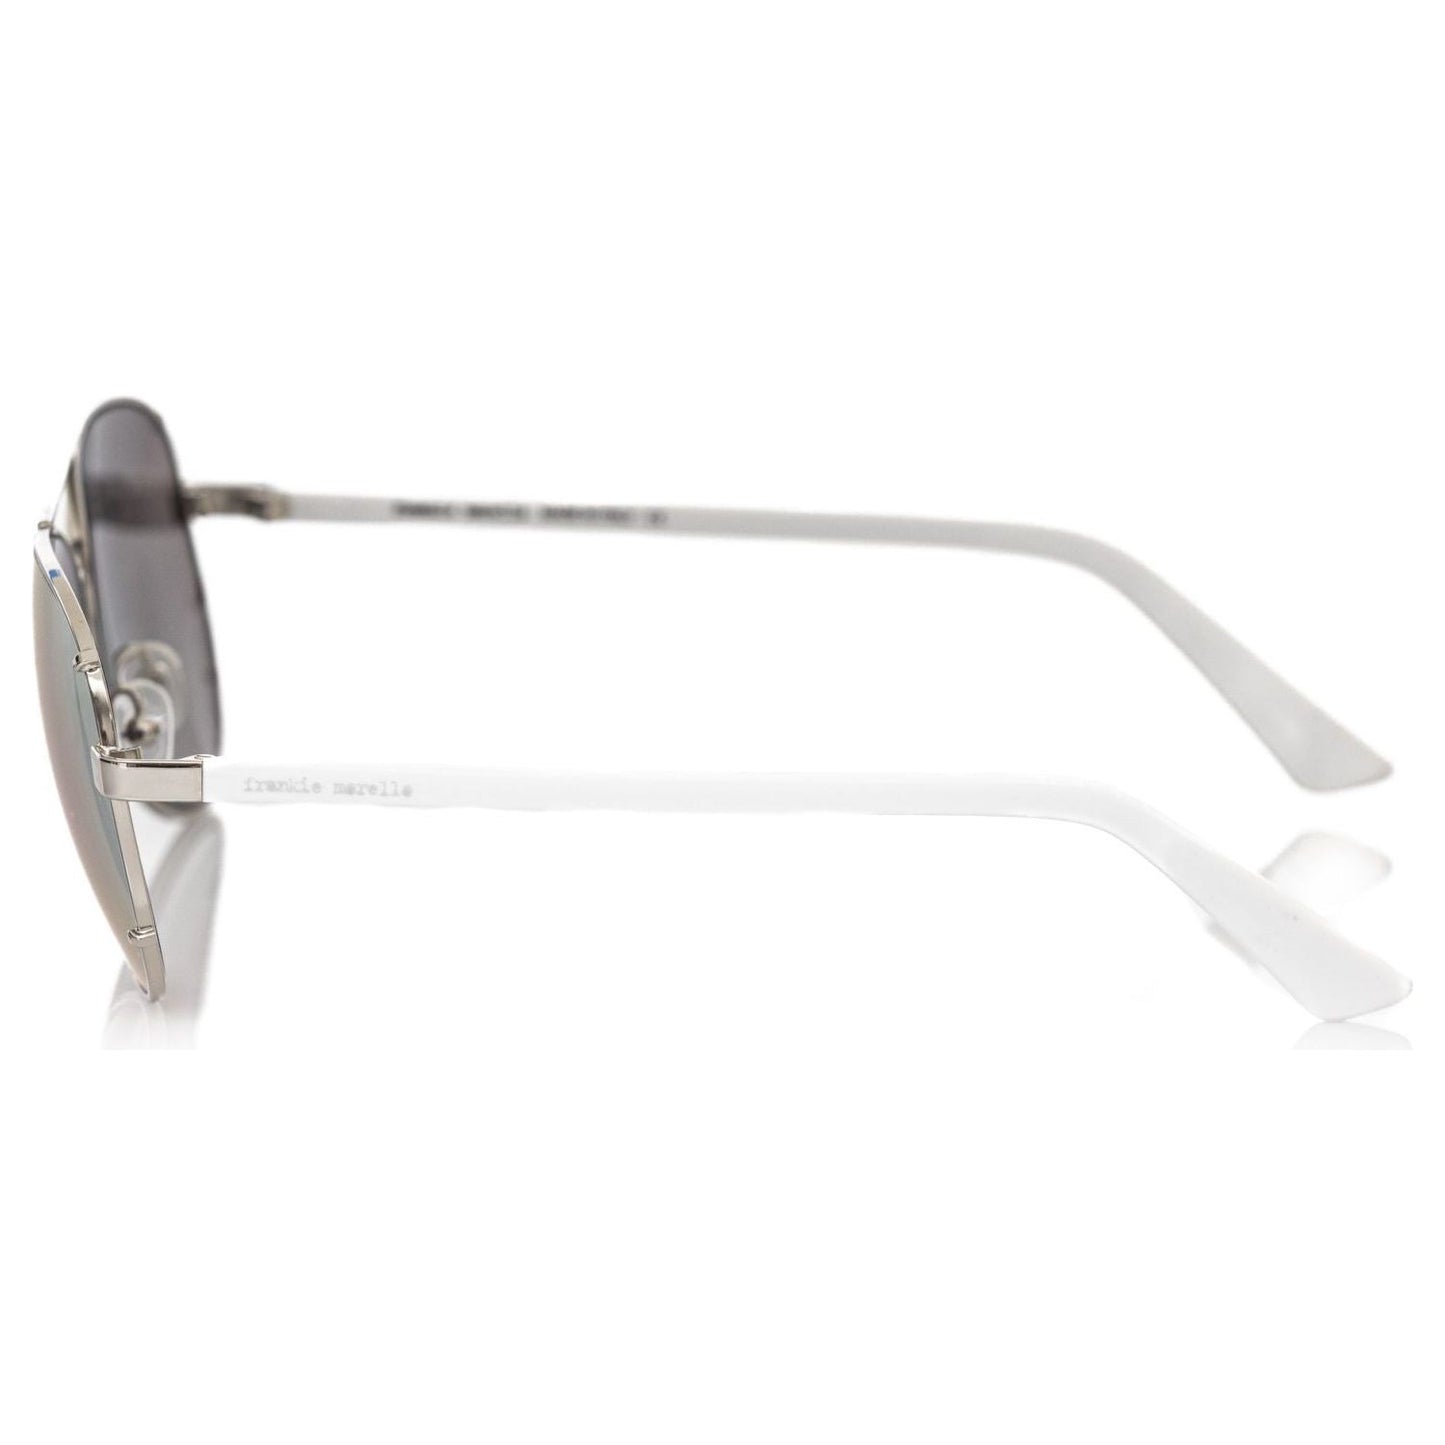 Frankie Morello Elegant Aviator Eyewear with Smoked Lenses silver-metallic-fibre-sunglasses-3 product-22121-339100945-scaled-60efc9e5-b0d.jpg